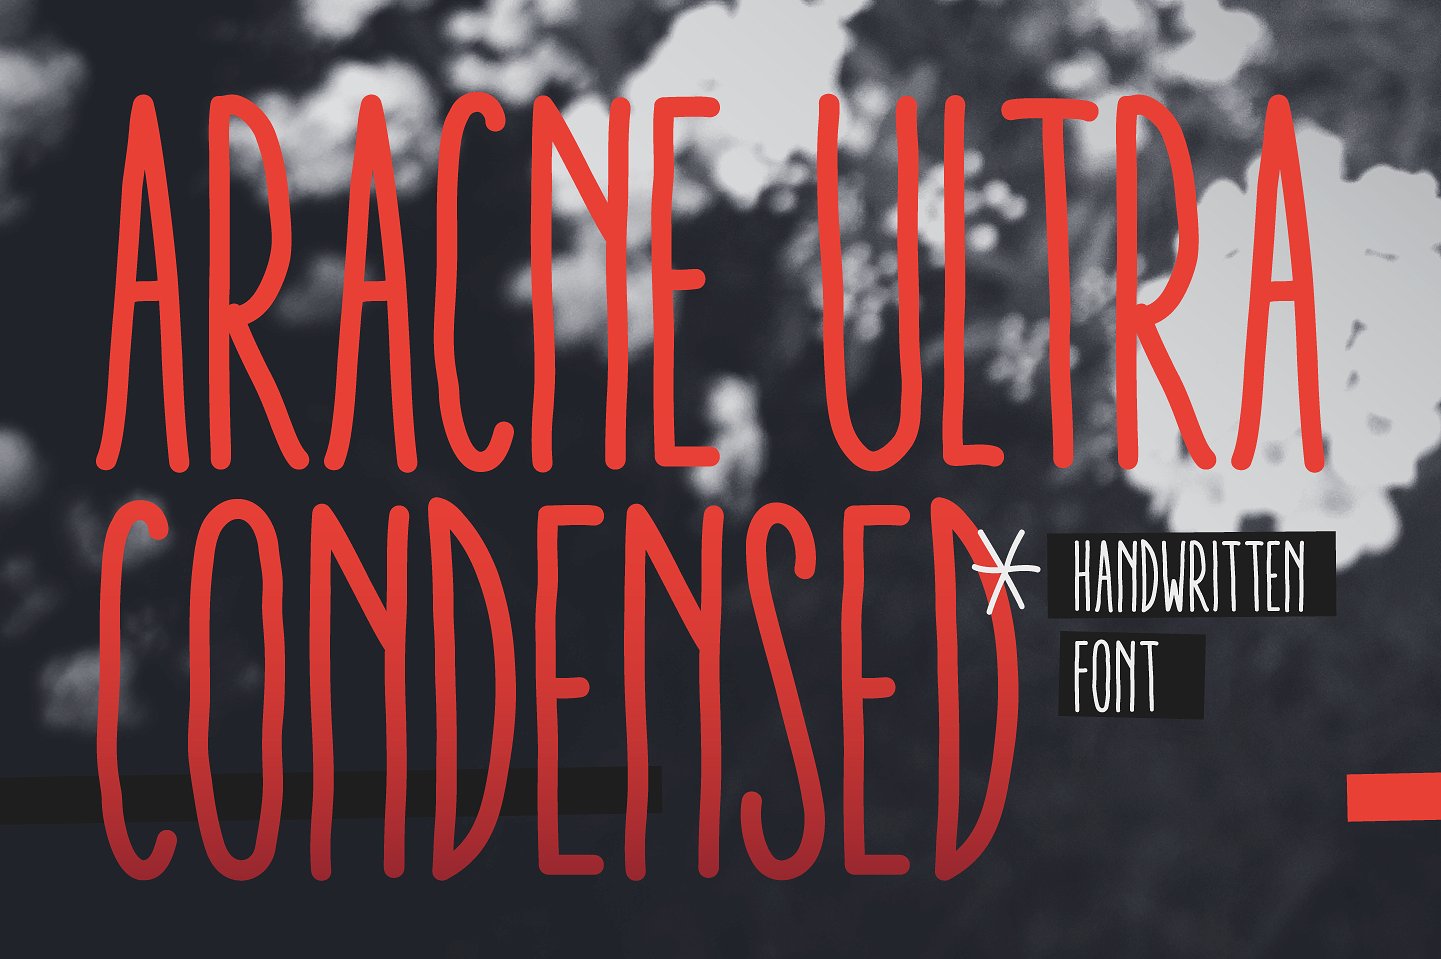 Aracne Ultra Condensed Script & Handwritten Font By antipixel